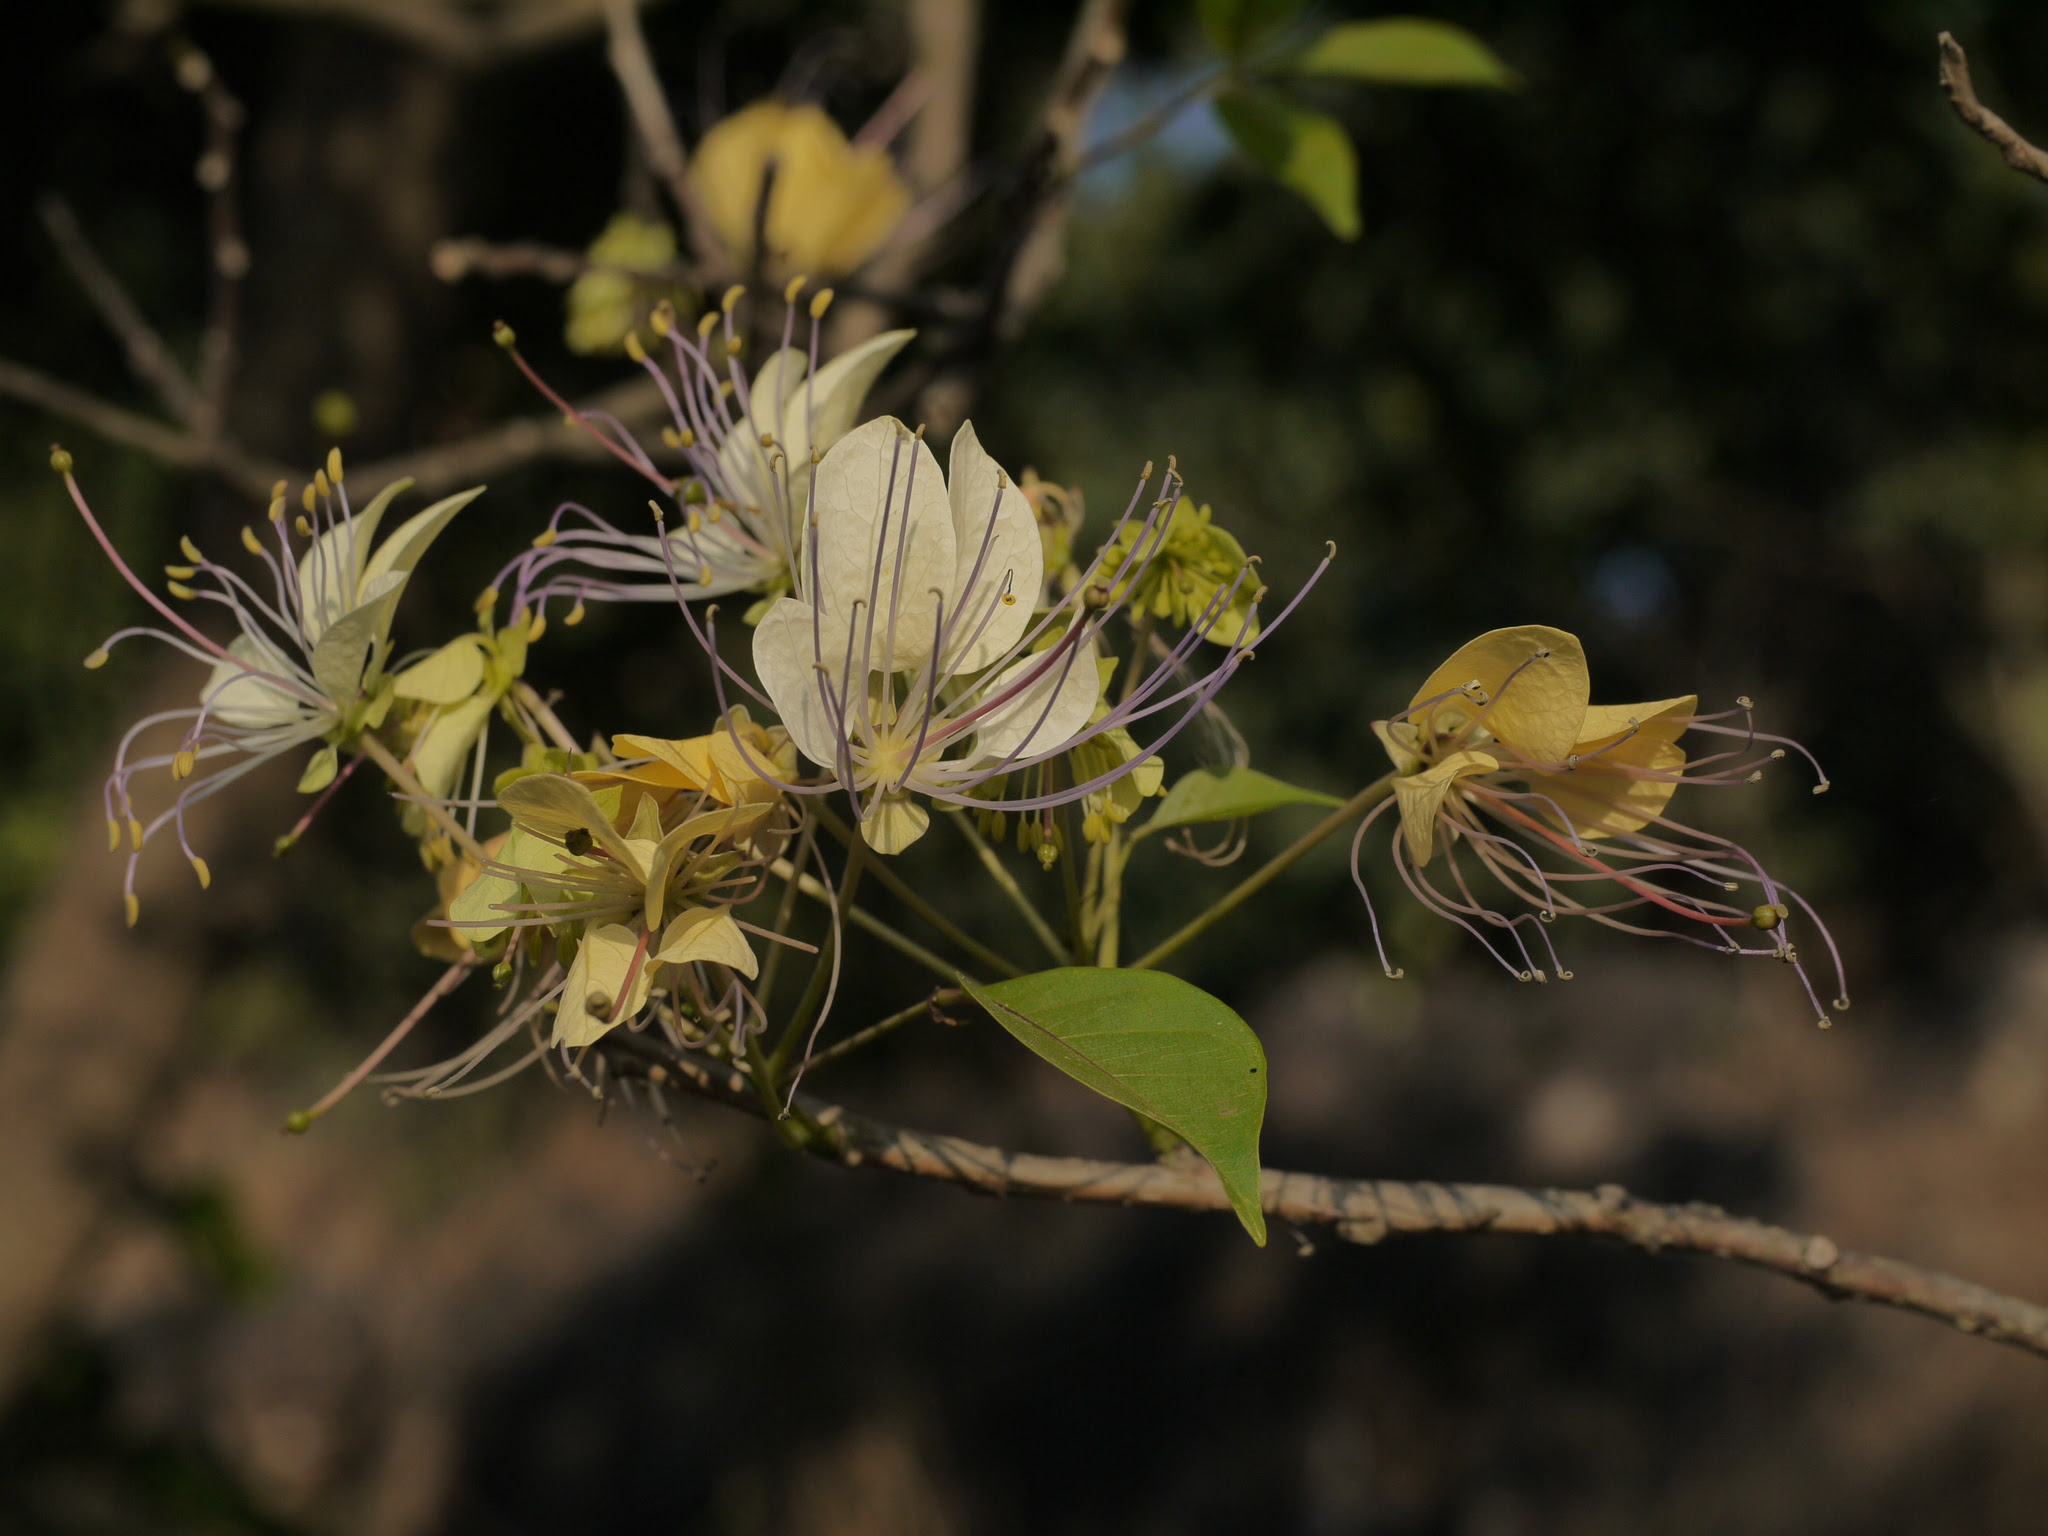 Crateva adansonii subsp. odora (Buch.-Ham.) Jacobs ... FOR VALIDATION